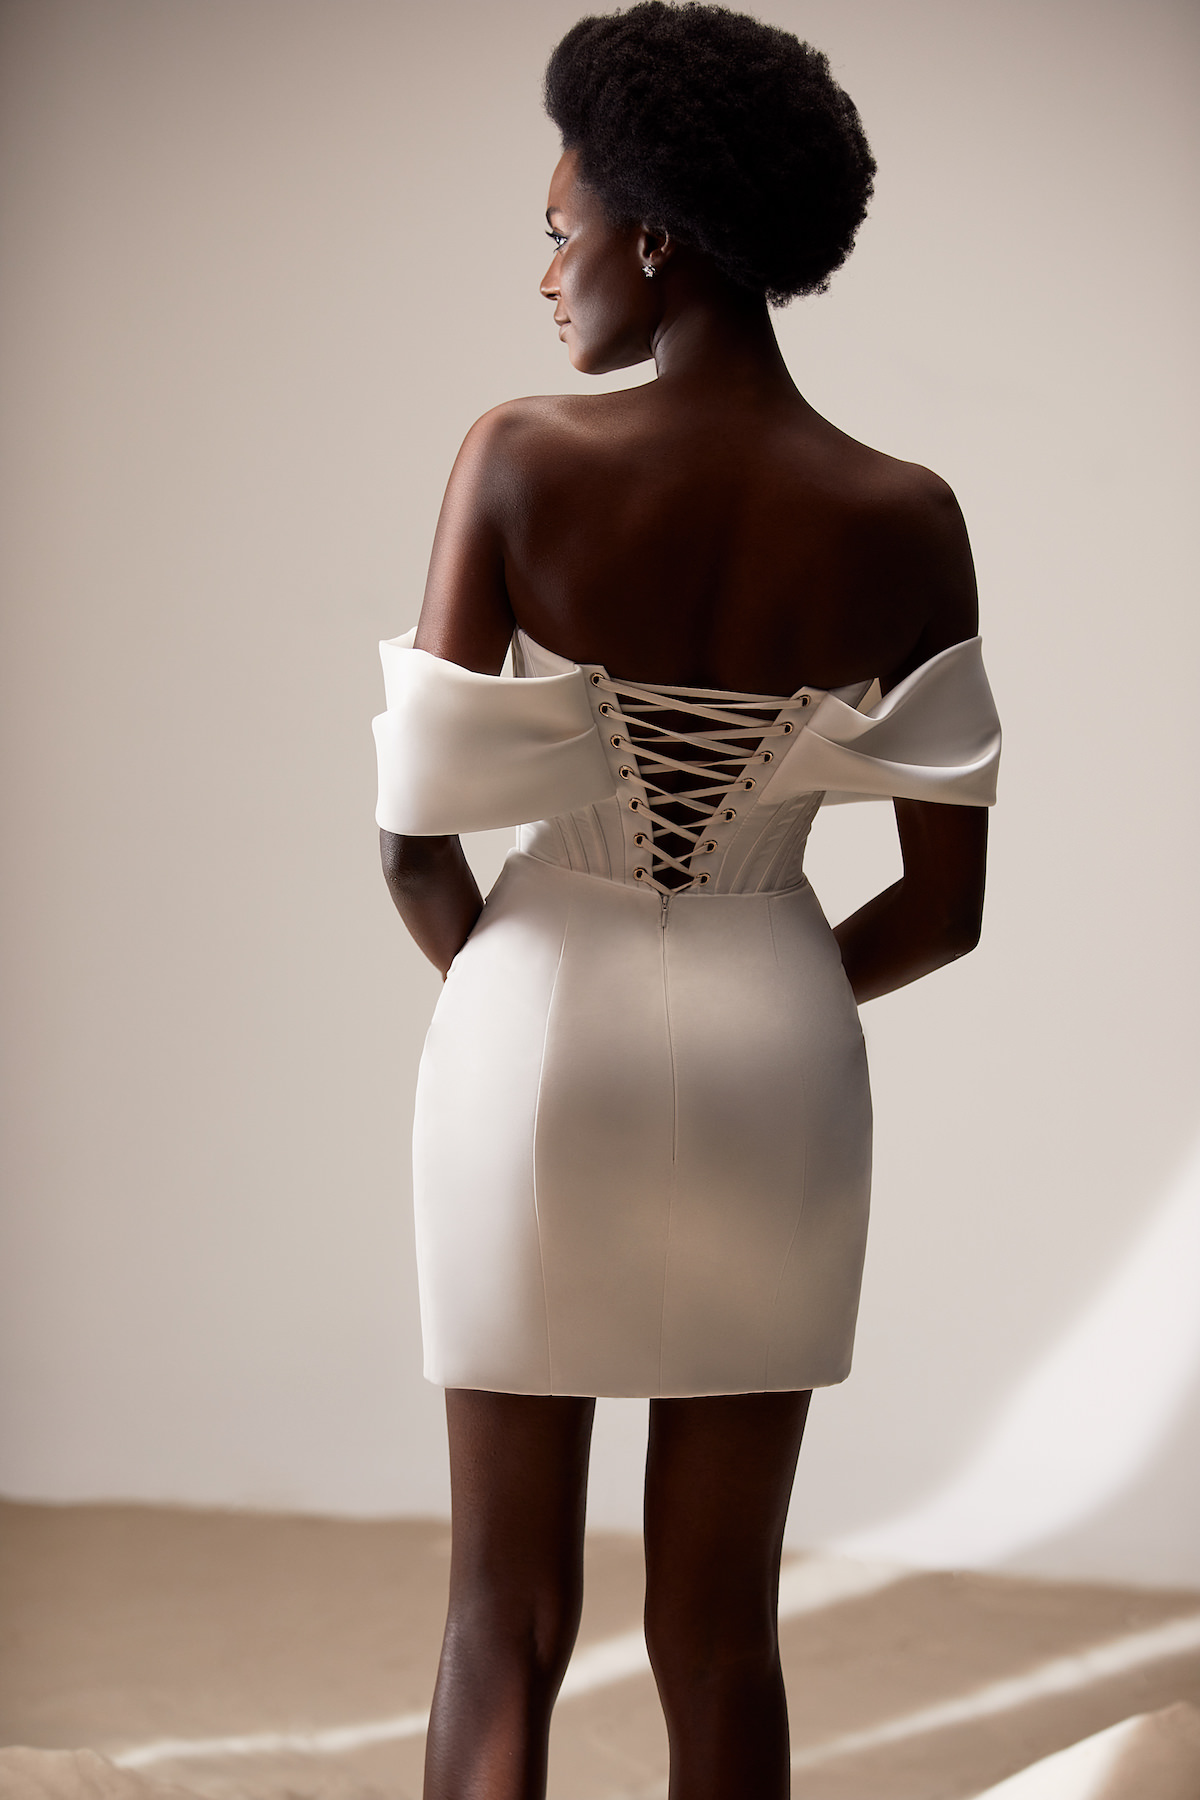 Modern short Wedding Dress by Milla Nova - Colette white lace